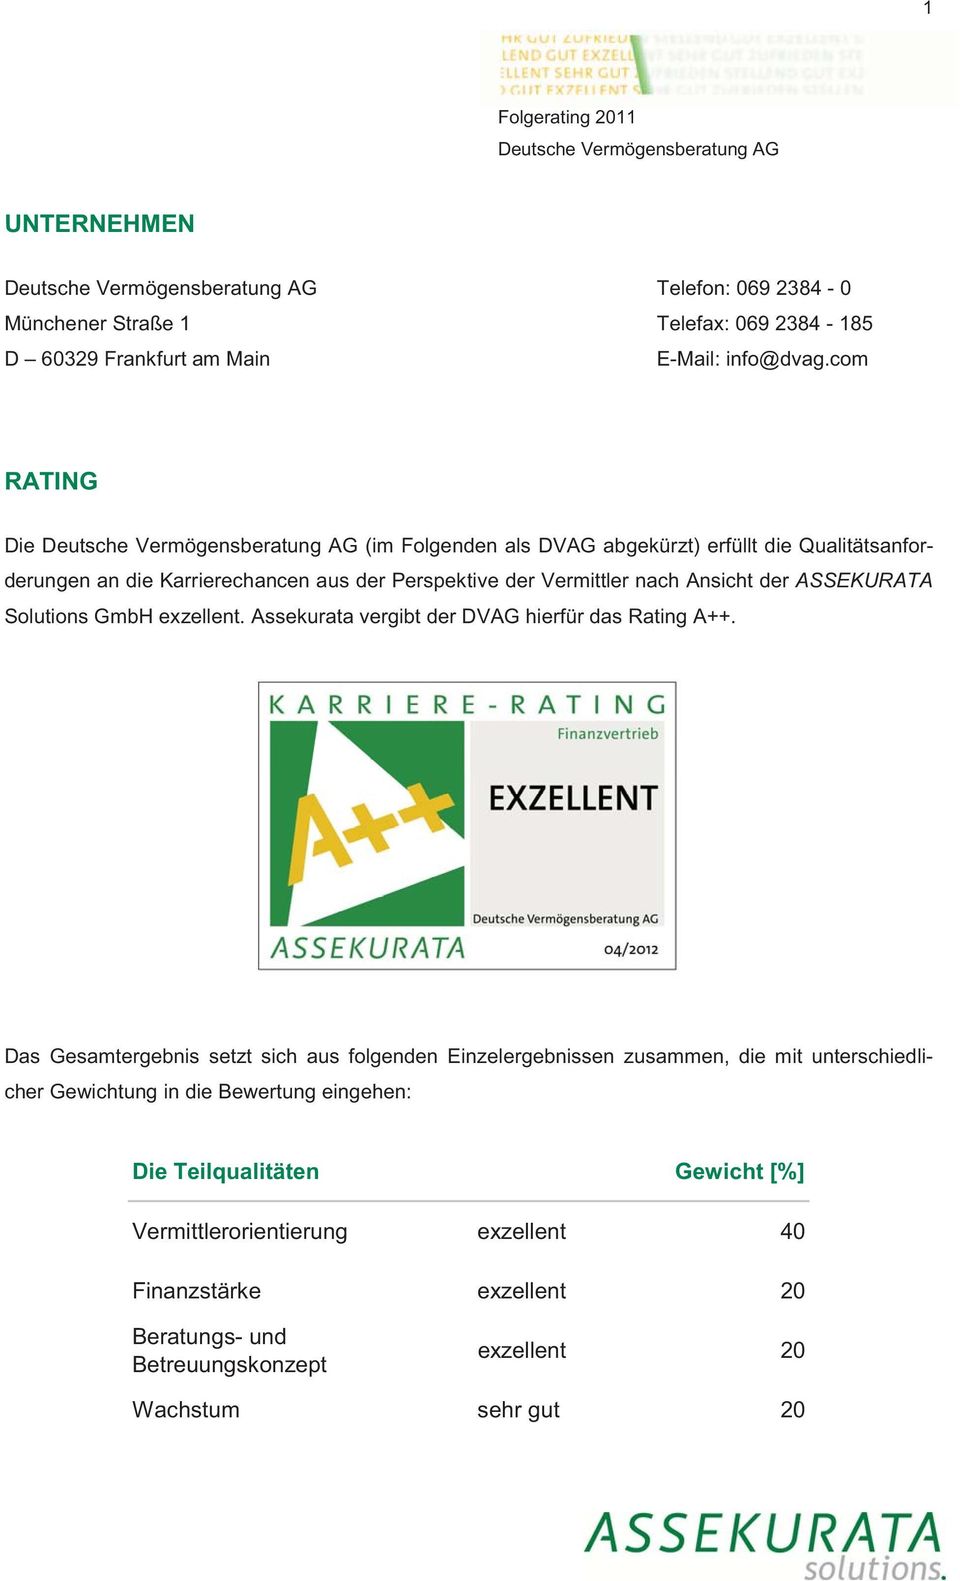 ASSEKURATA Solutions GmbH exzellent. Assekurata vergibt der DVAG hierfür das Rating A++.